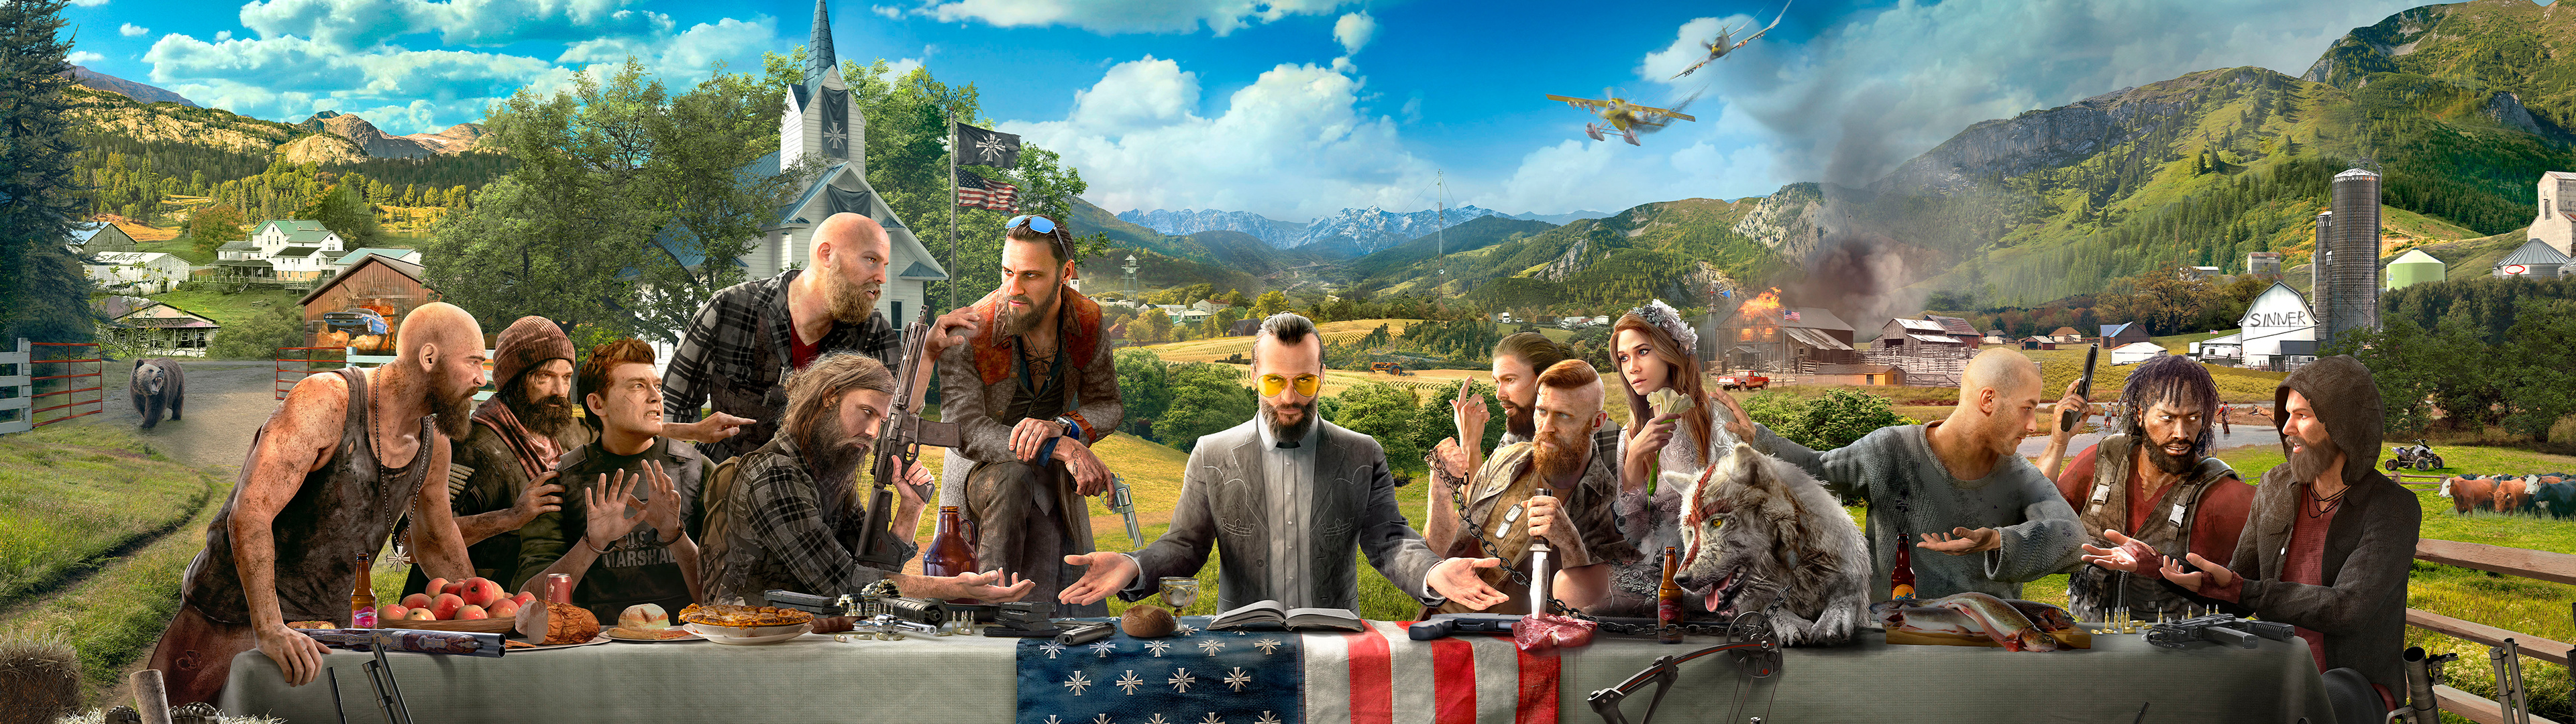 Far Cry 5, Key art, Massive battles, Captivating world, 3840x1080 Dual Screen Desktop